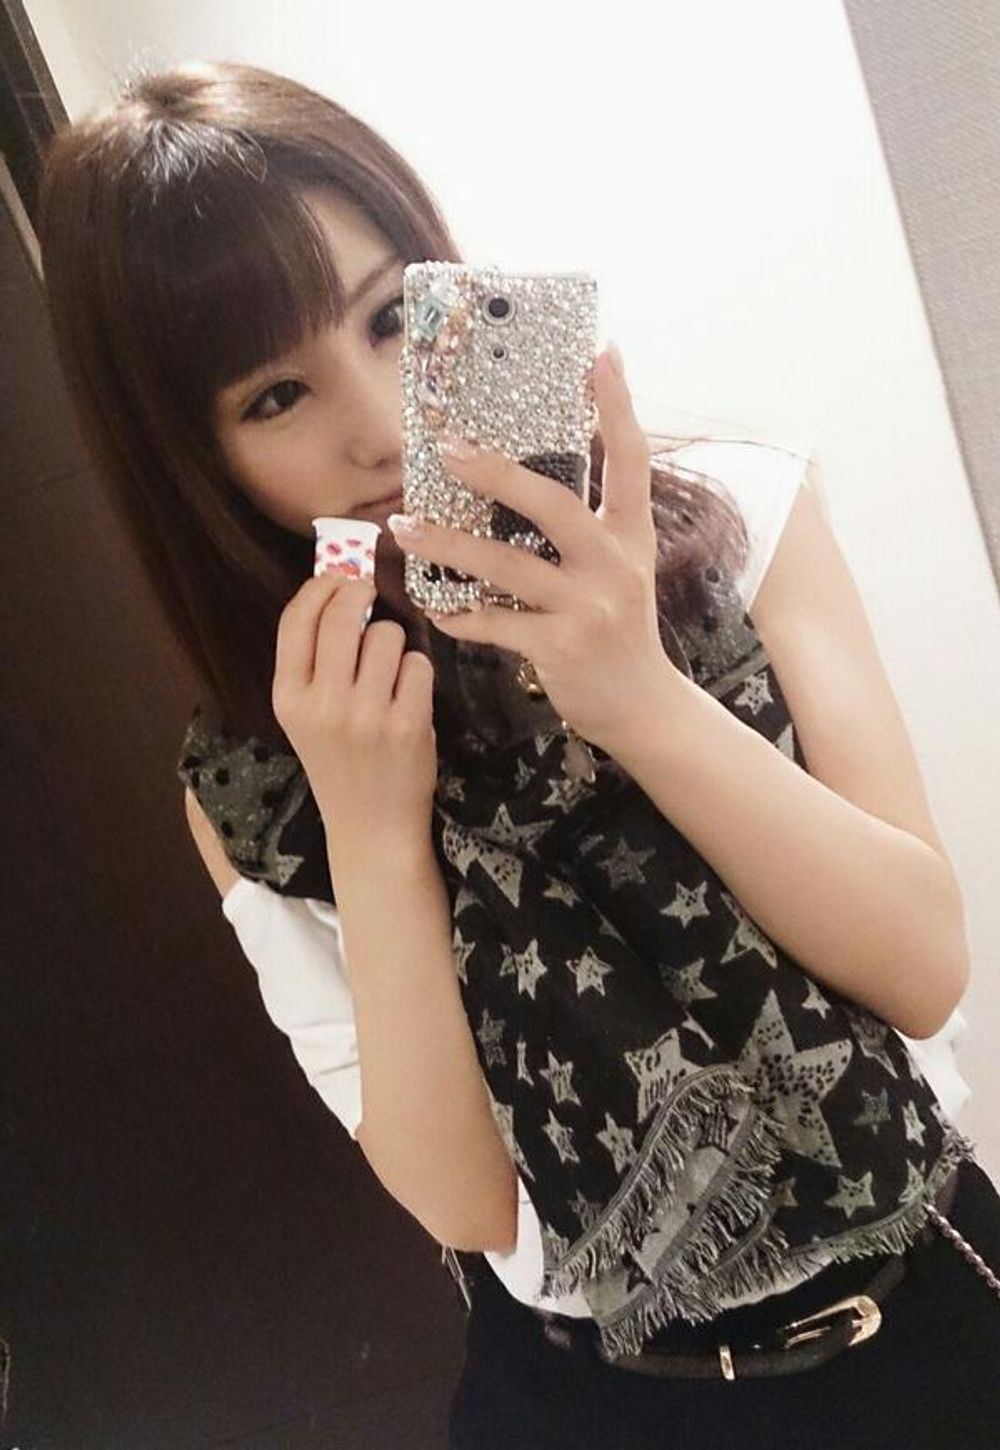 Caimei Xunguo (あやみ Xunguo)-Massive Weibo photos without makeup